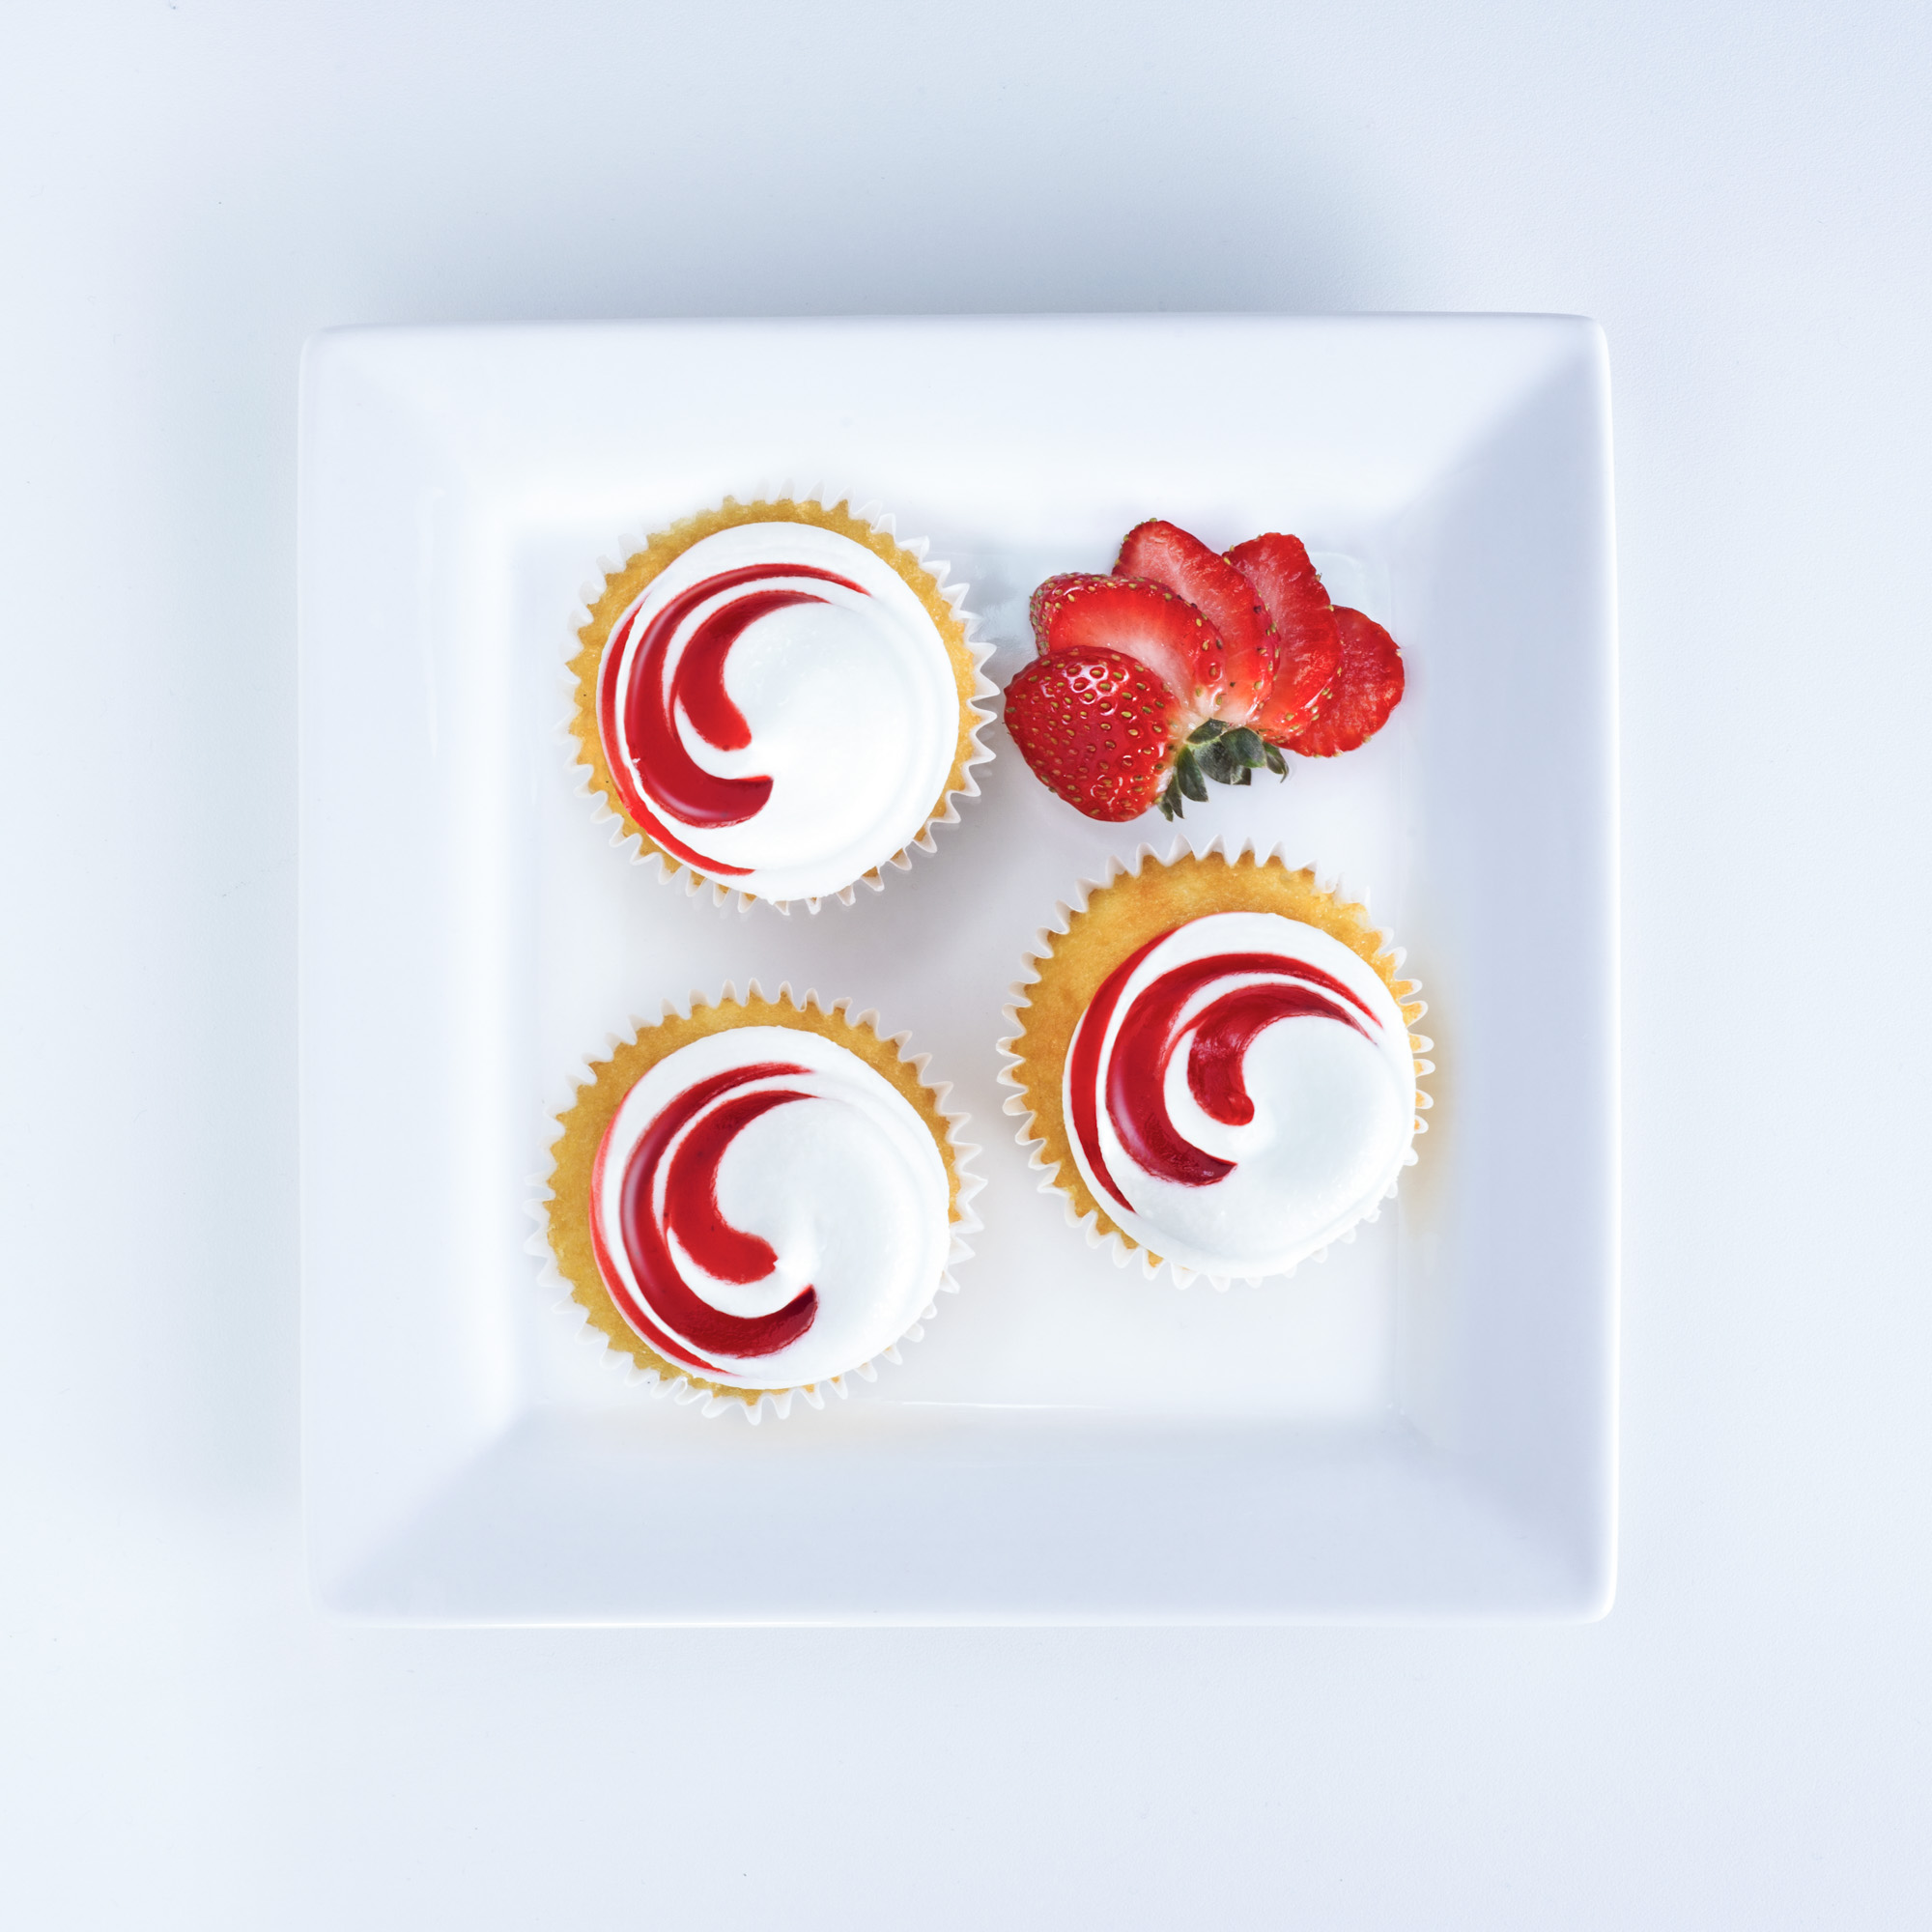 13_Strawberry_Swirl_Cupcakes_on_White_websize